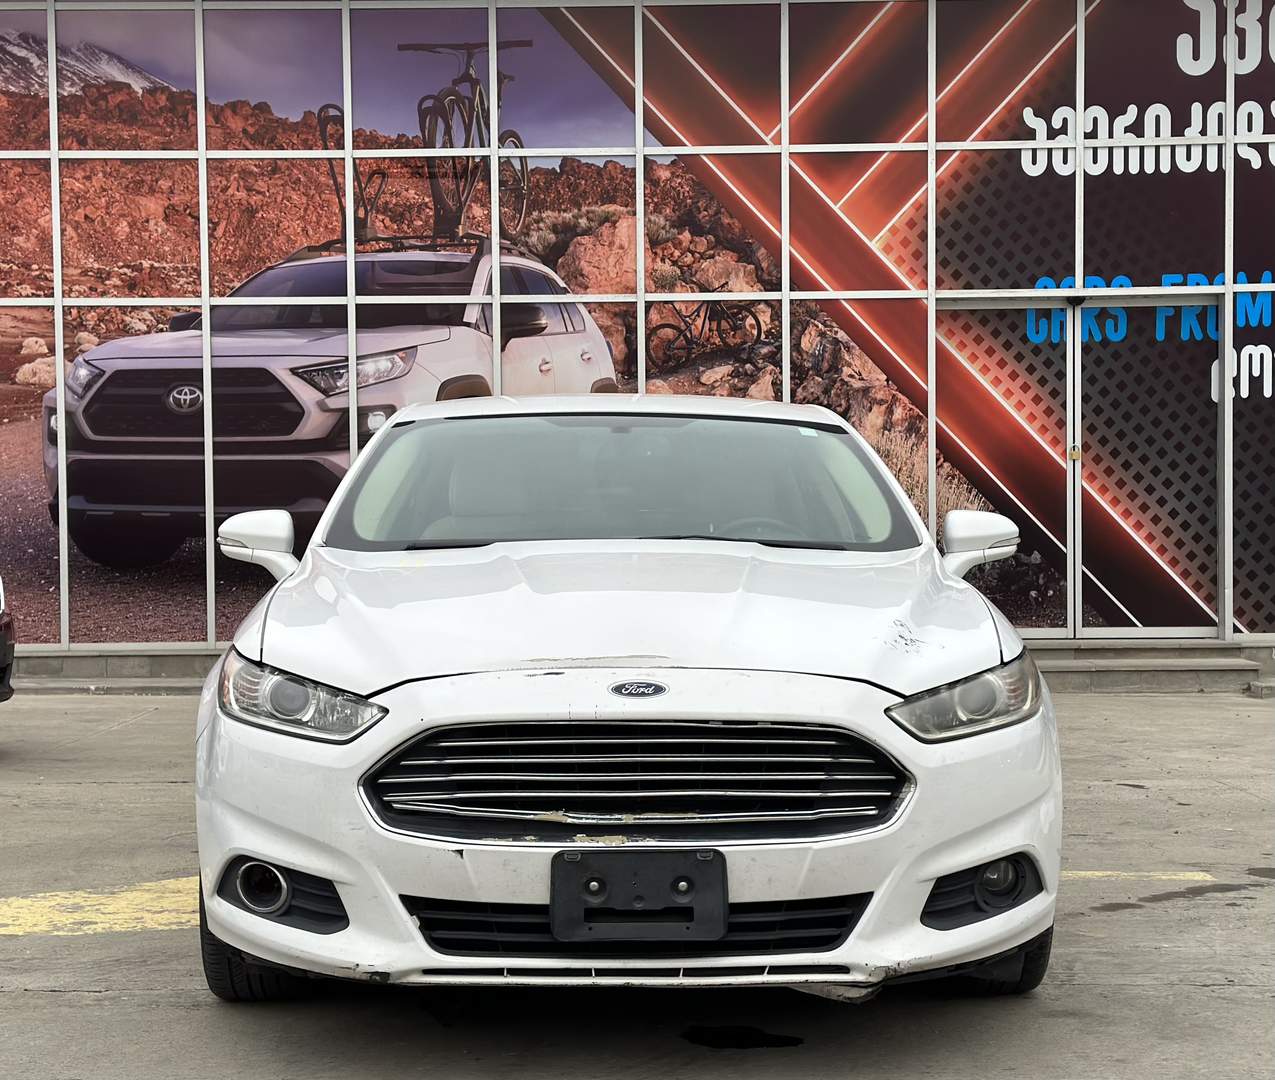 Ford Fusion, 2015 (# 755255) — Autopapa — Caucasus main auto